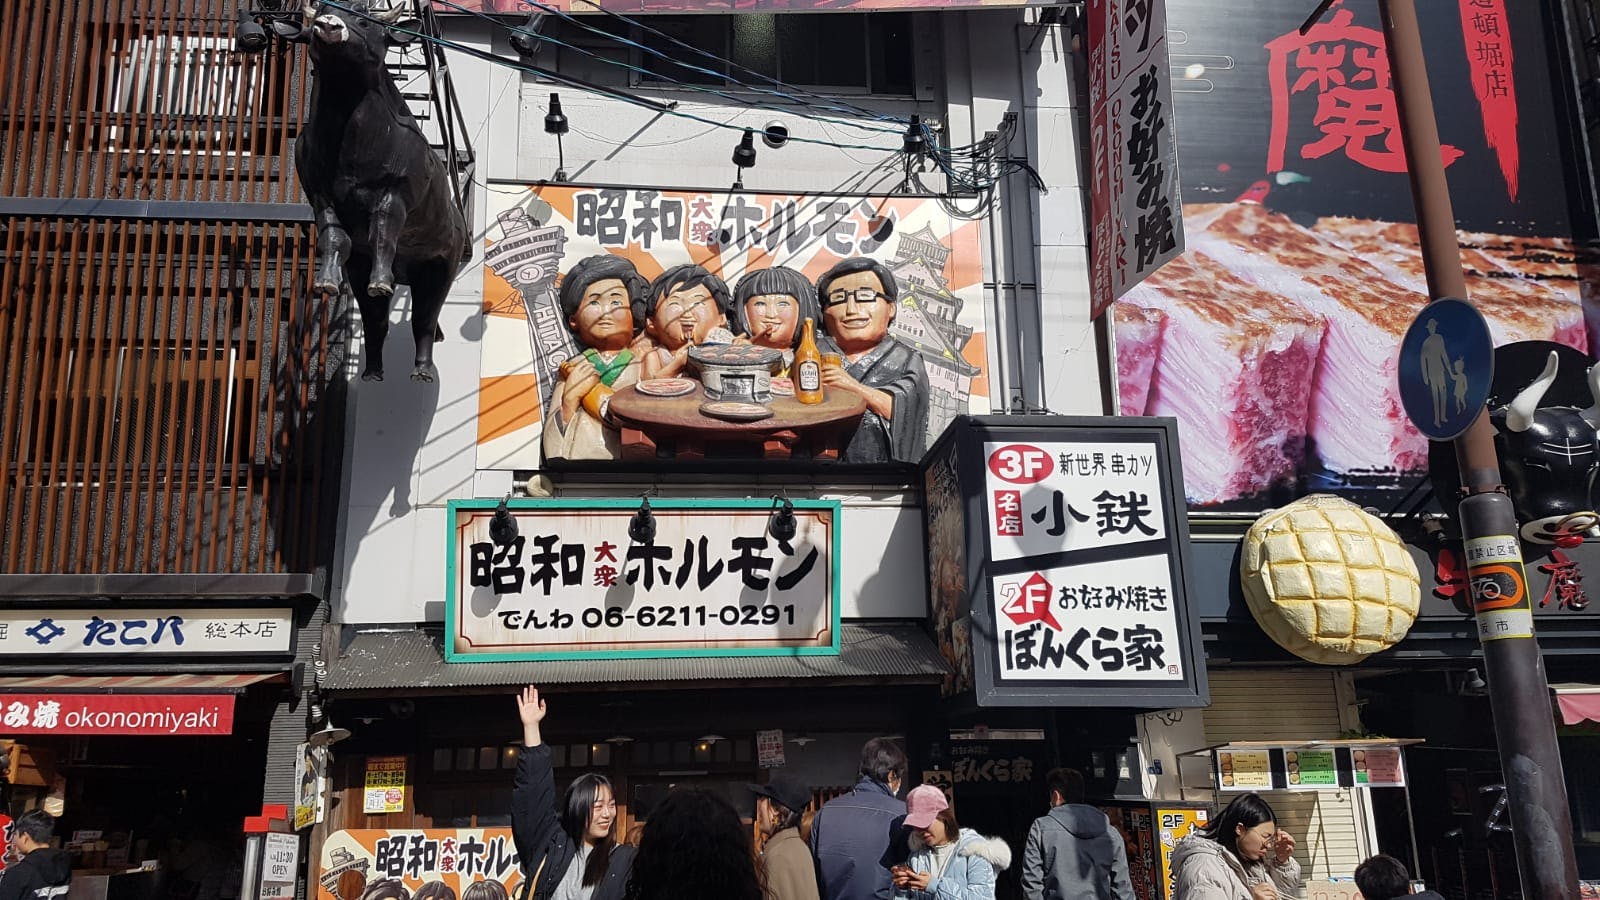 Osaka populair Japans eten oorsprong stadsspel en tour